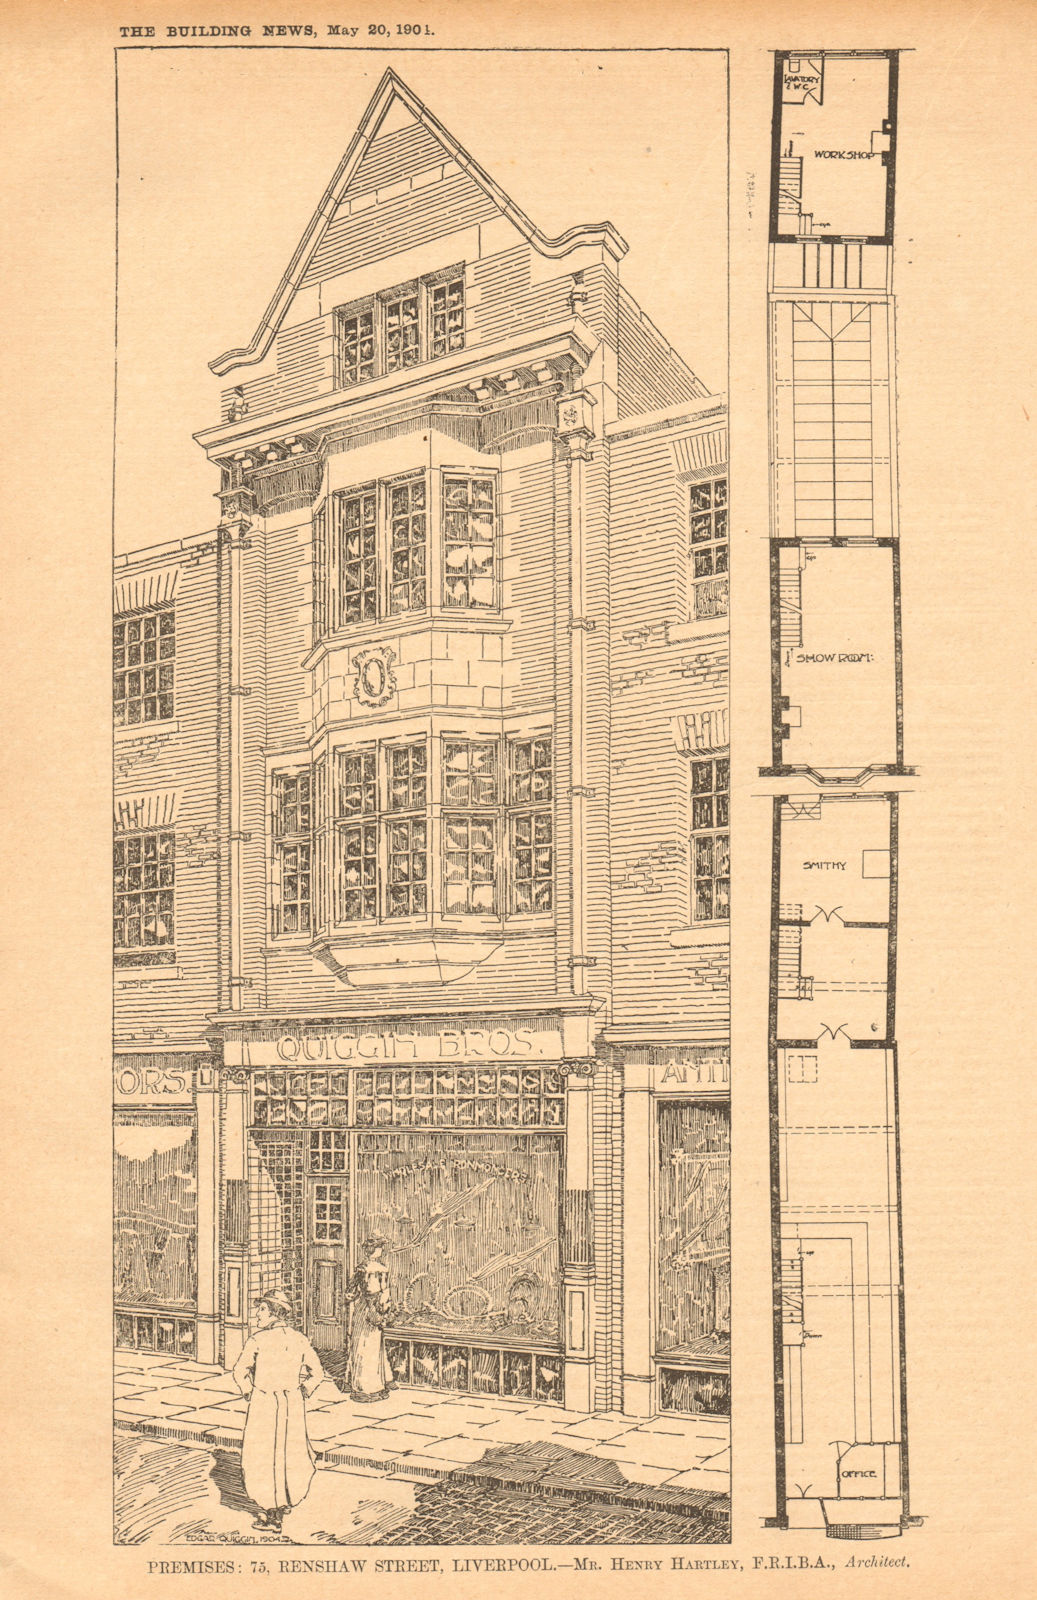 Associate Product 75, Renshaw Street, Liverpool - Mr. Henry Hartley, FRIBA, Architect. Plans 1904